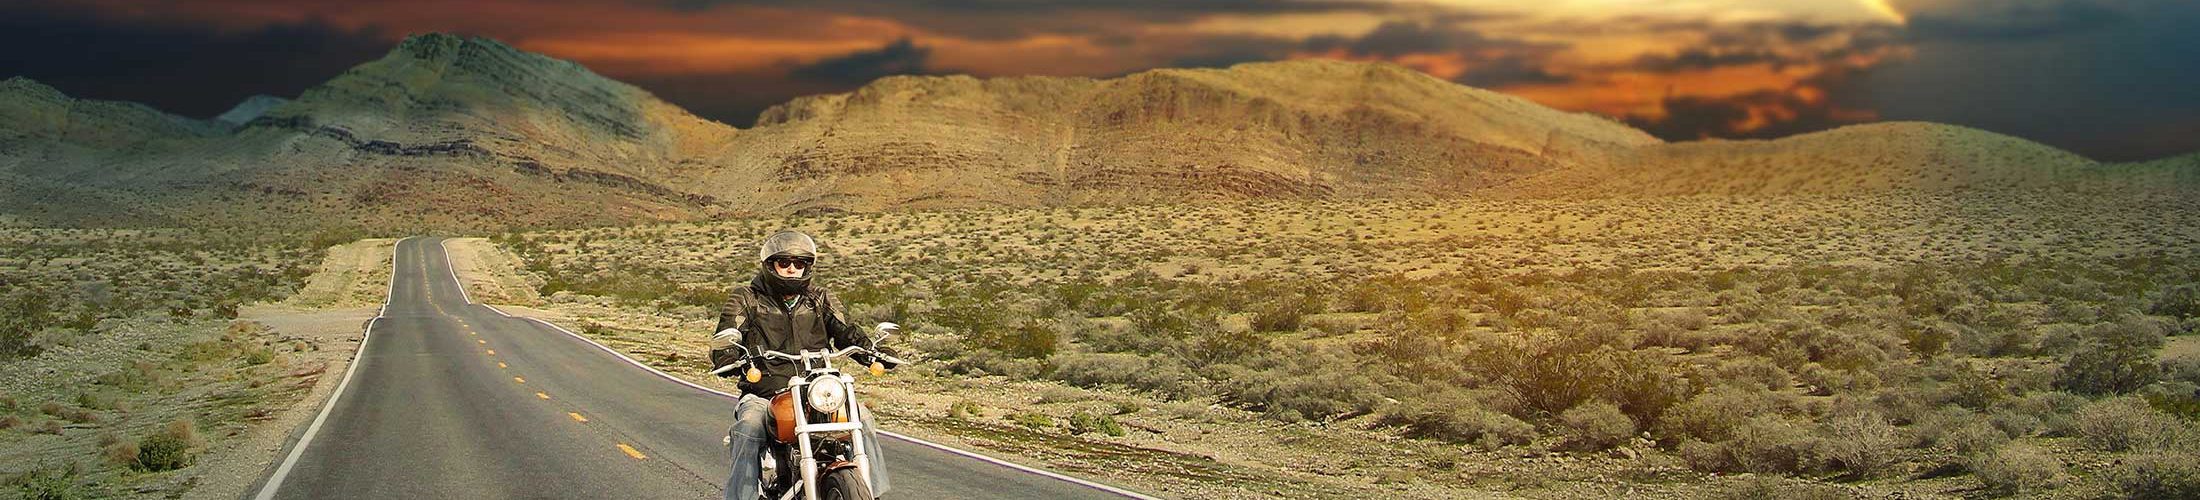 Man on motorcycle riding through the desert at sunset